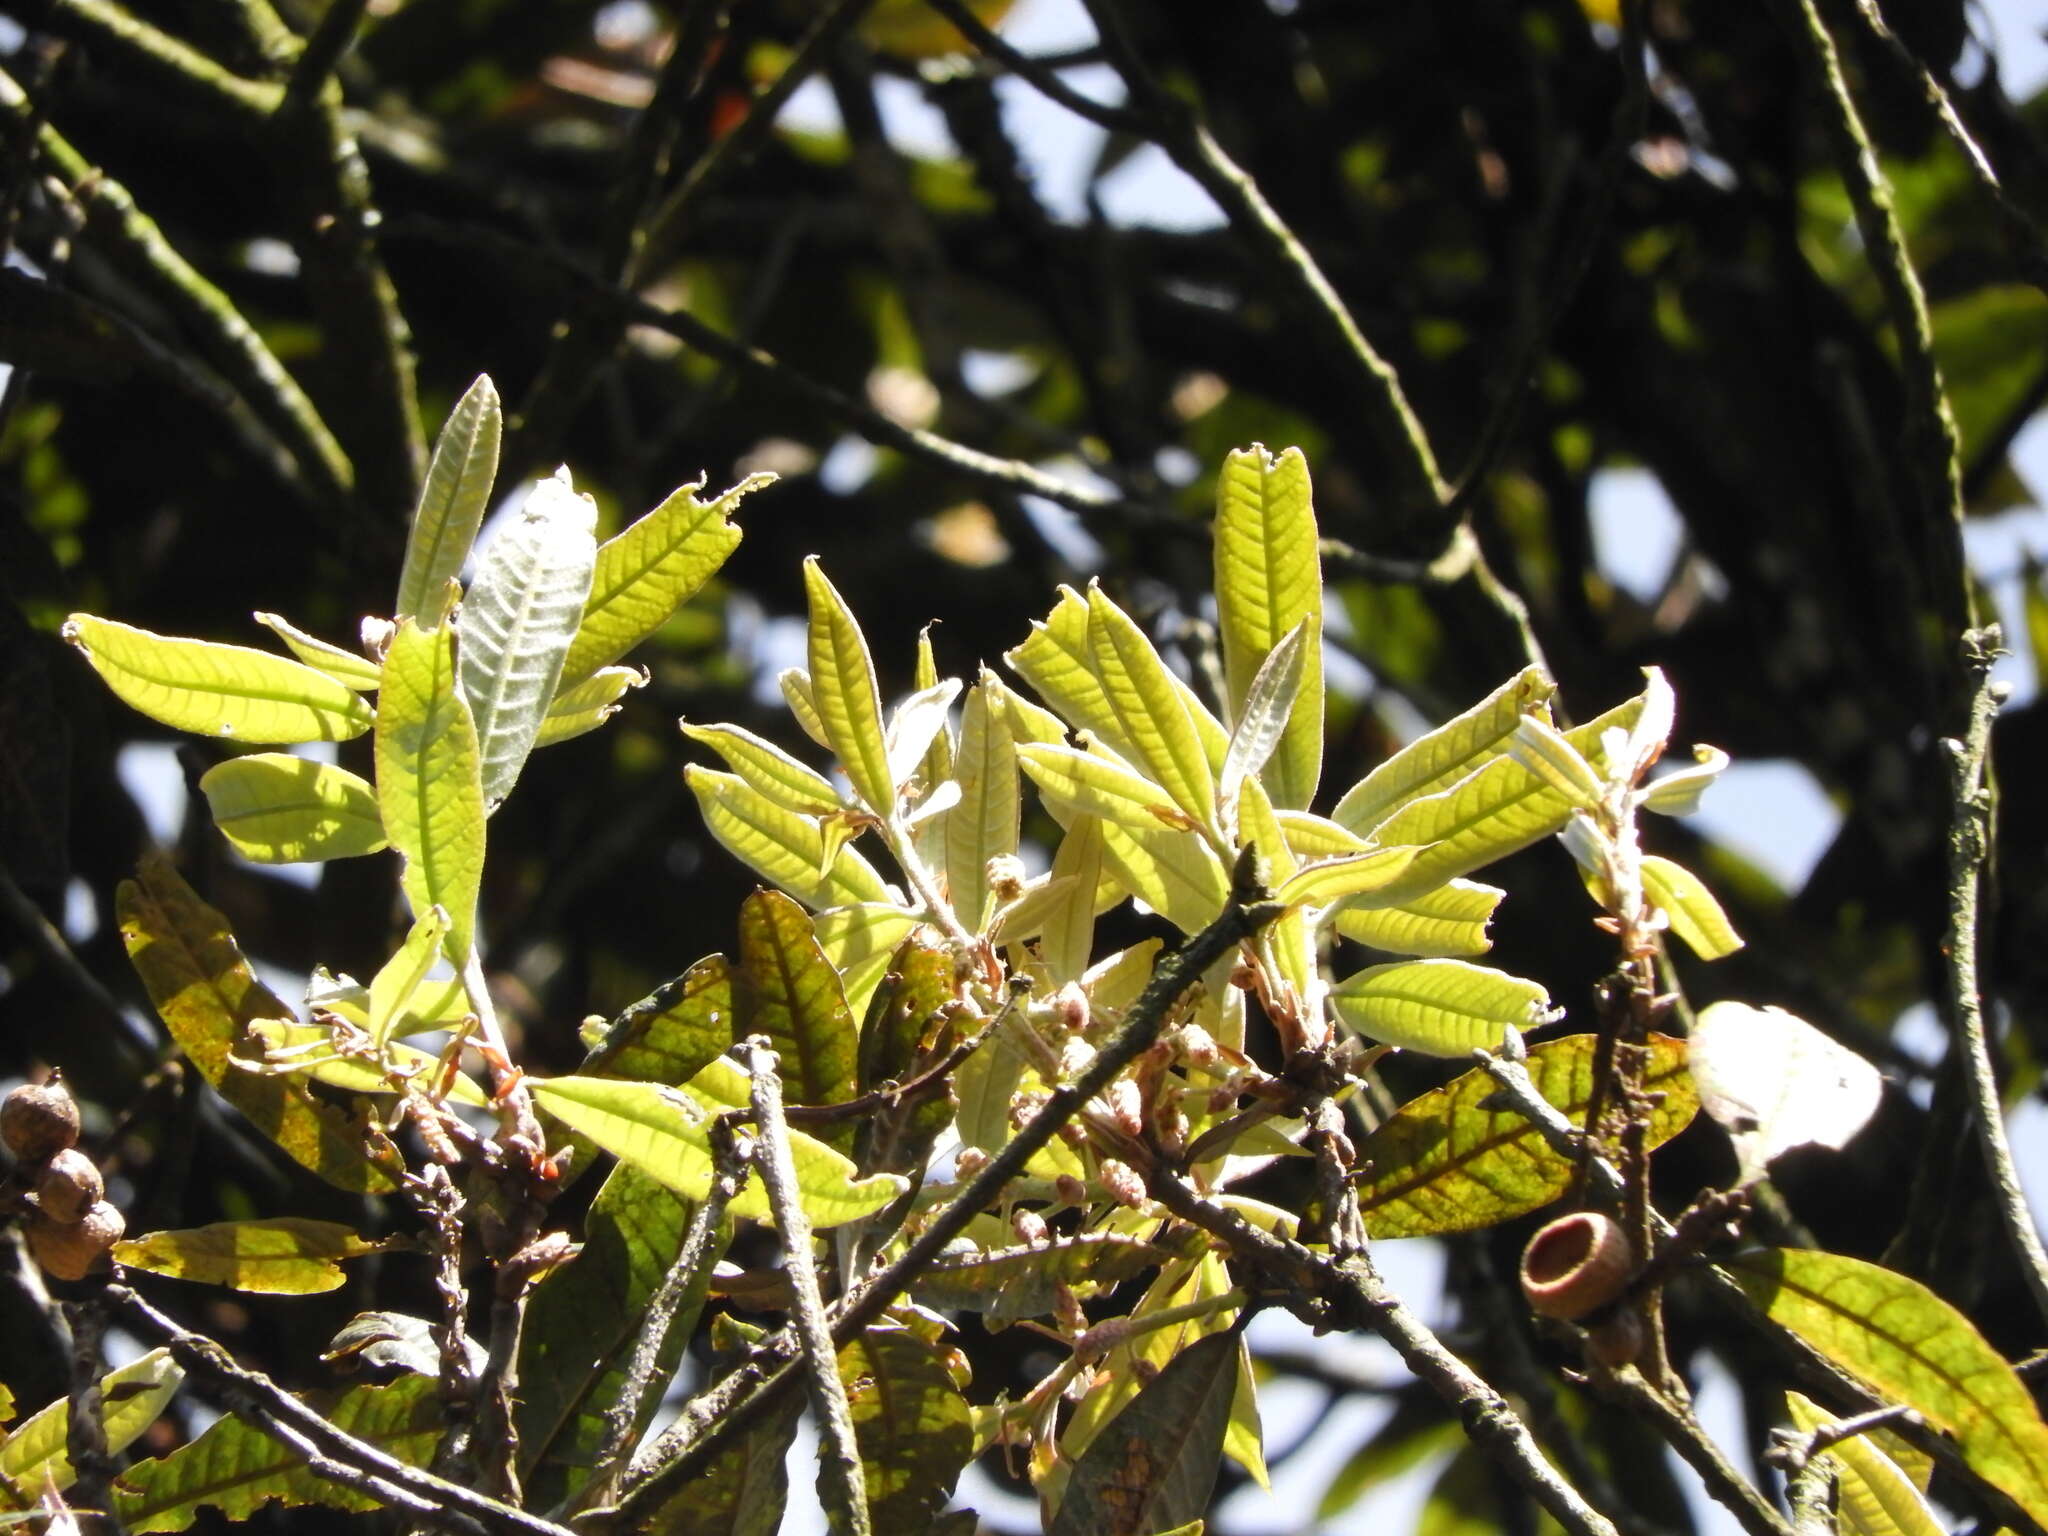 Image of Andean oak